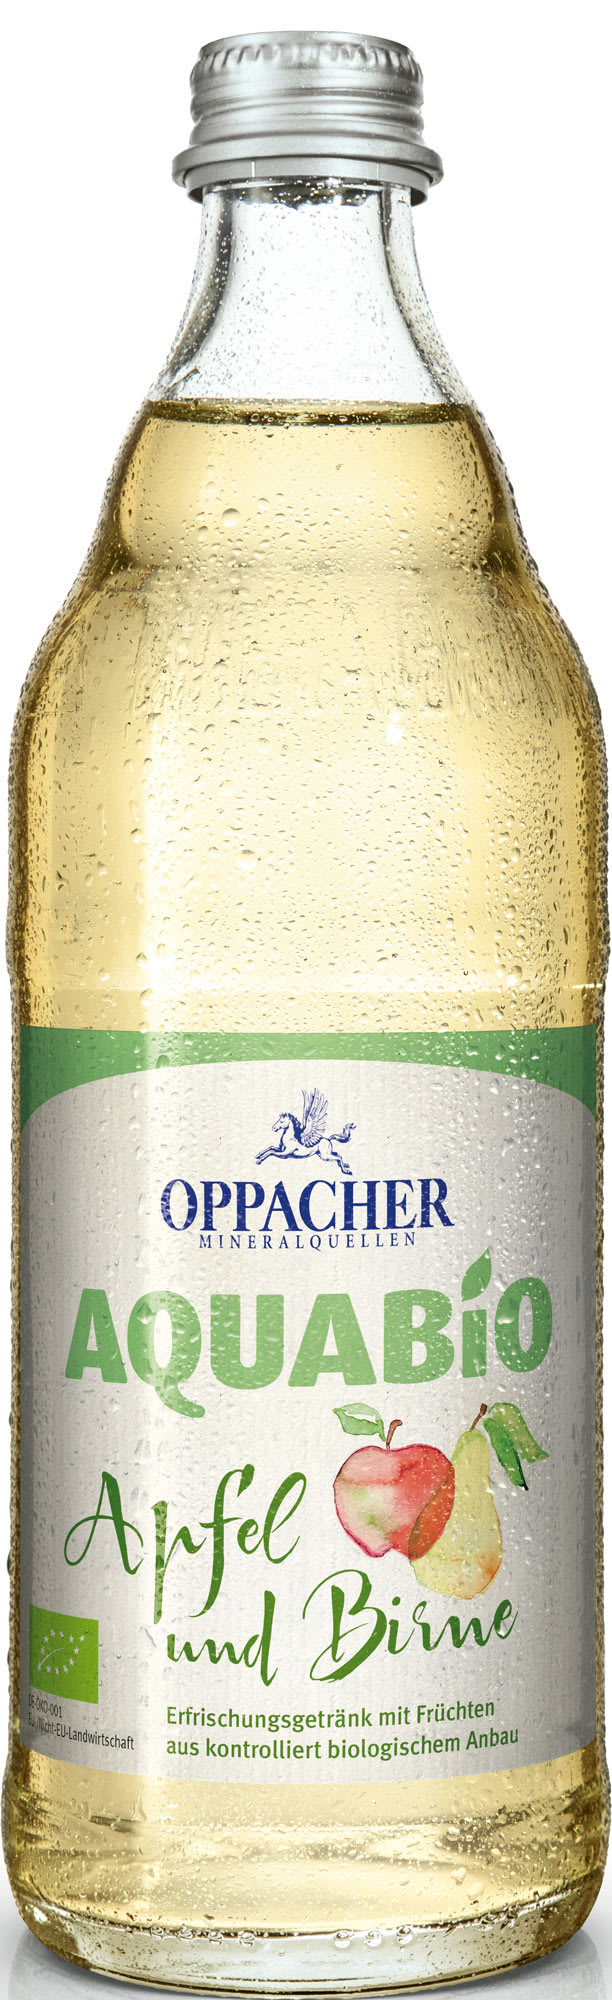 Oppacher Aquabio Apfel Birne 0,5 l Glas Mehrweg